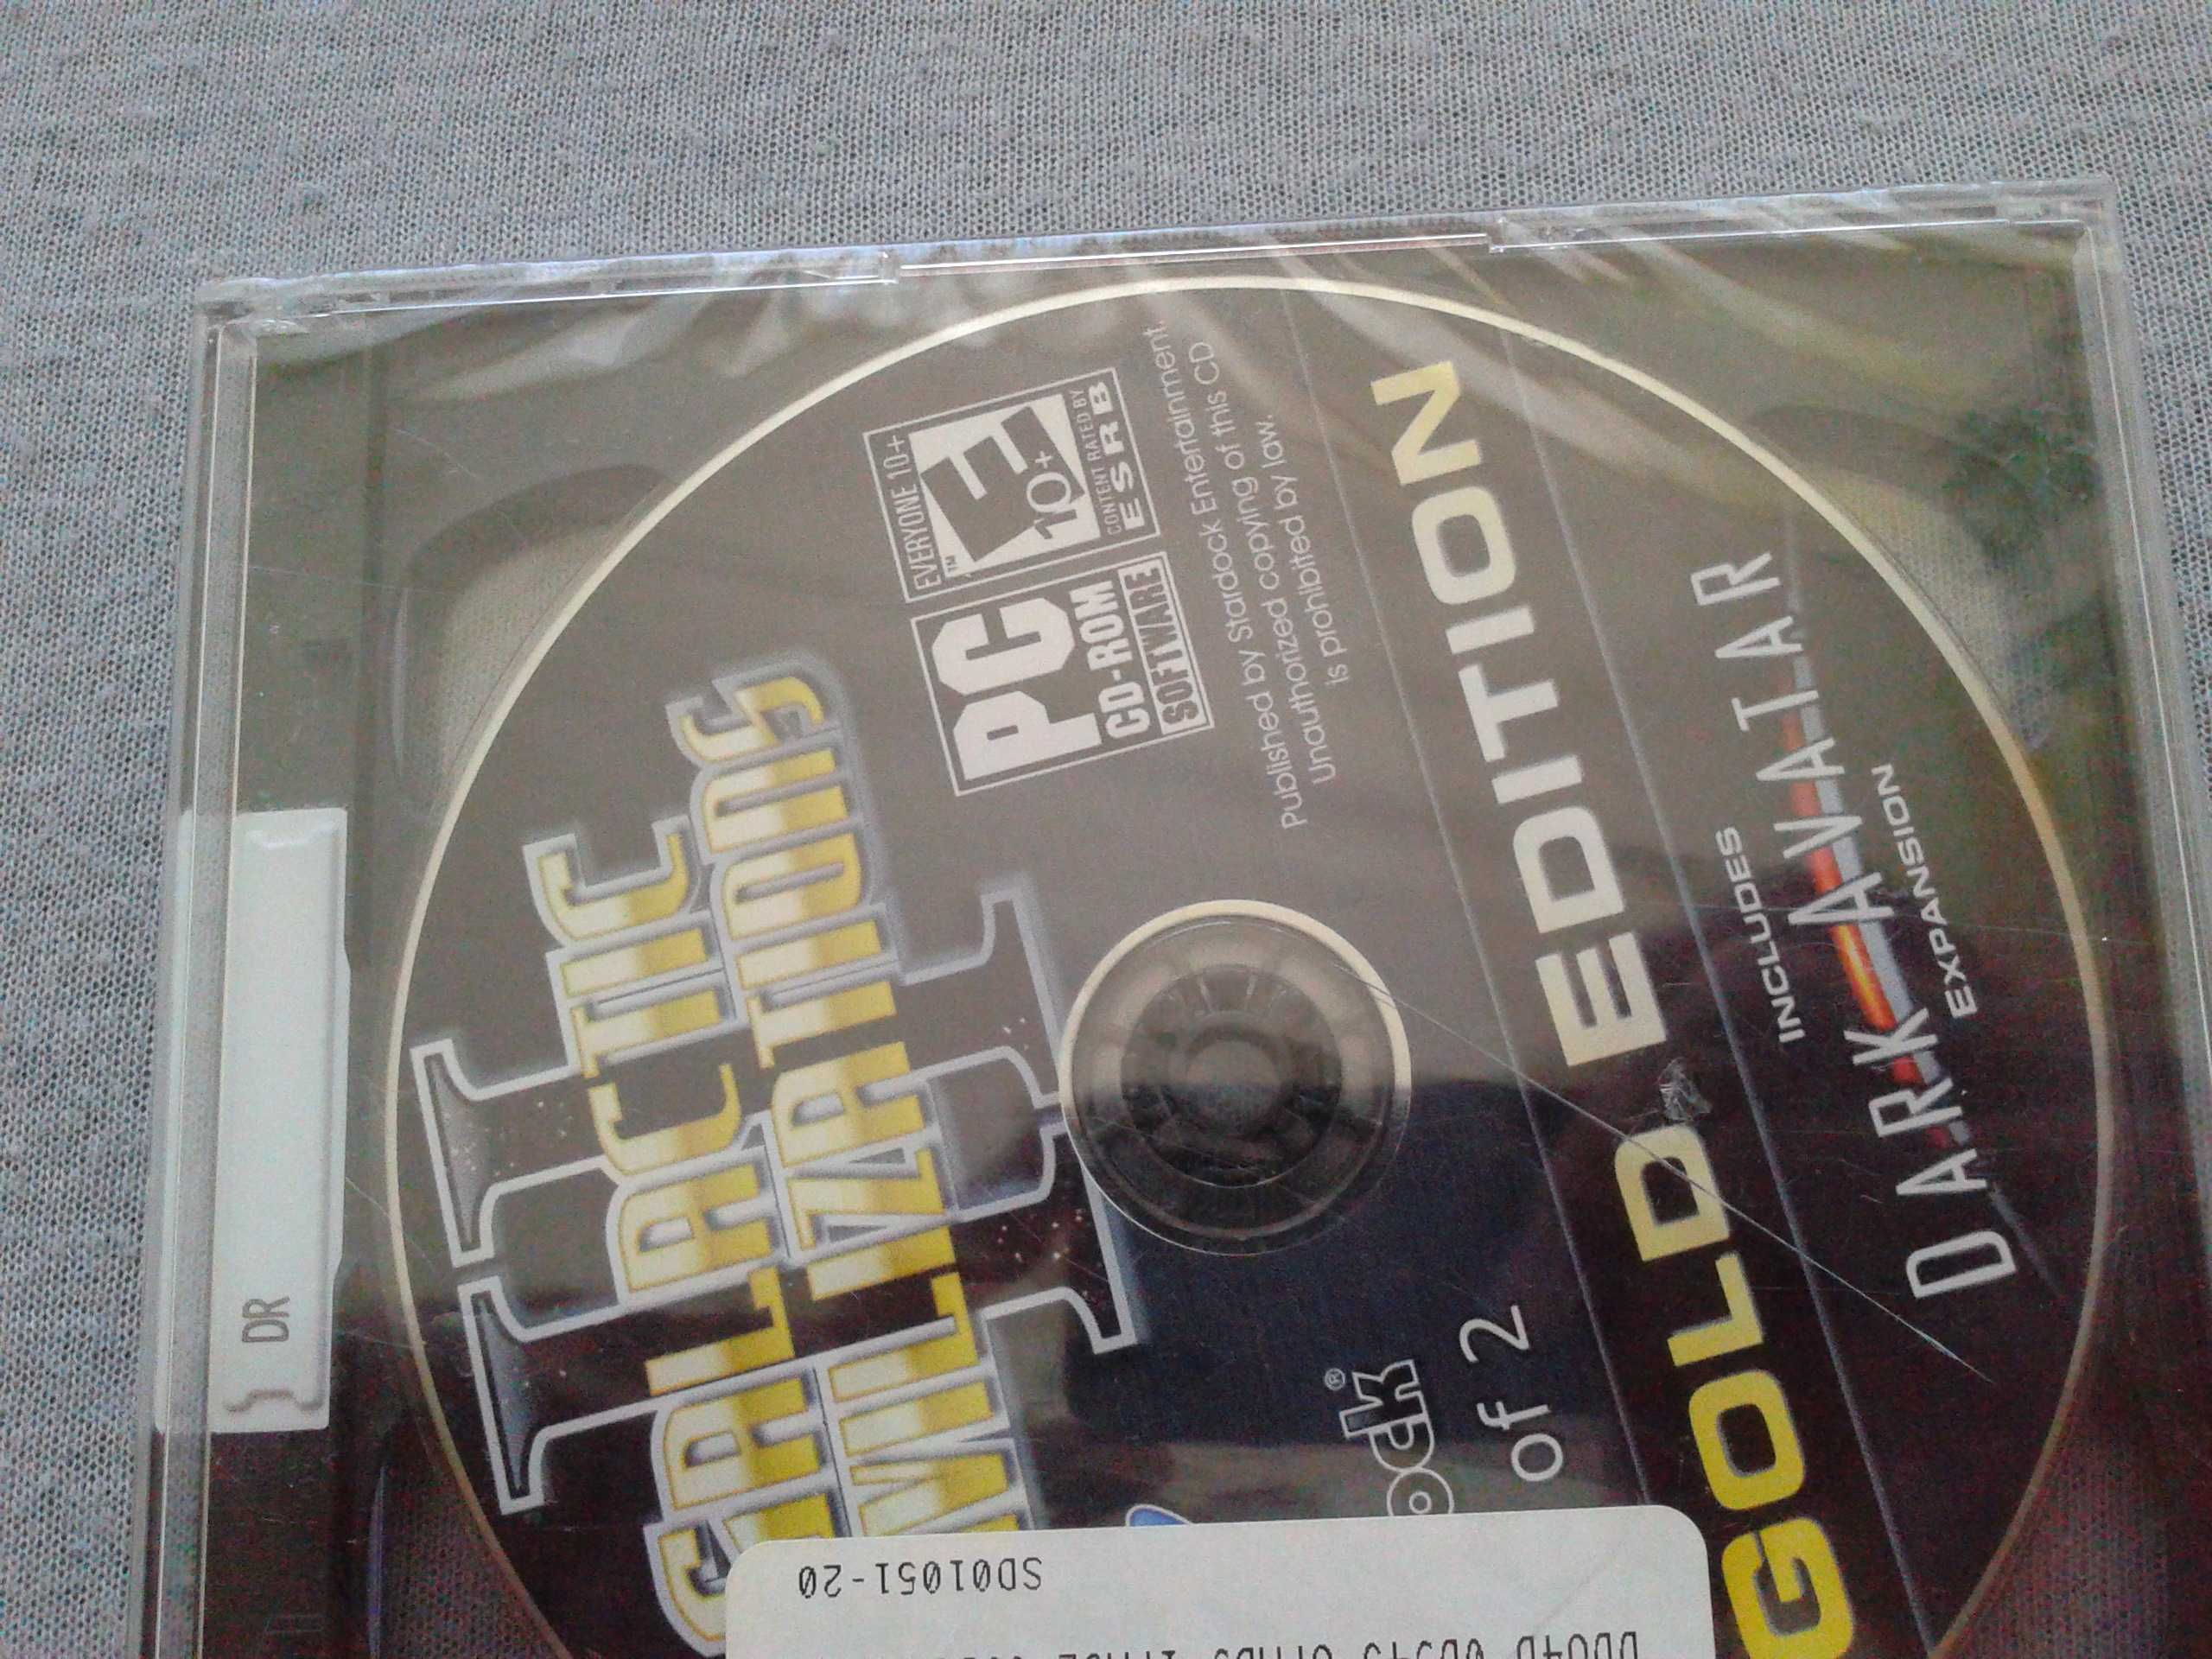 Galactic Civilizations II, Gold Edition  PC  2CD